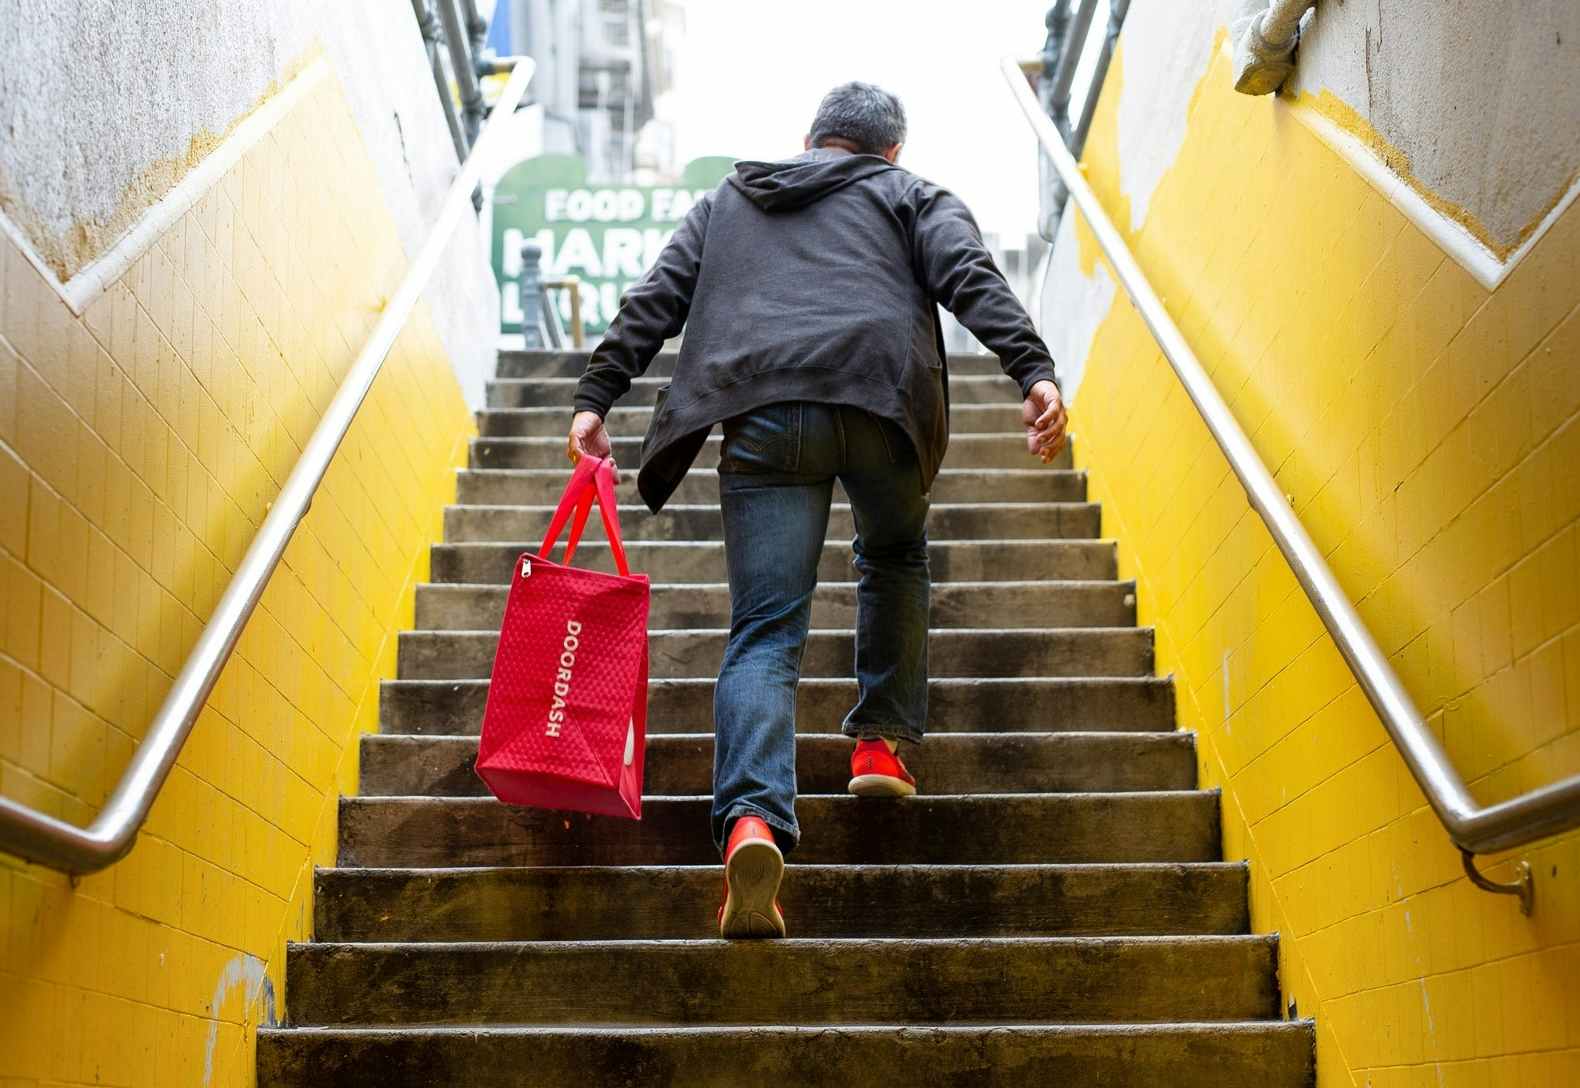 A man walking up some stairs carrying a DoorDash bag.